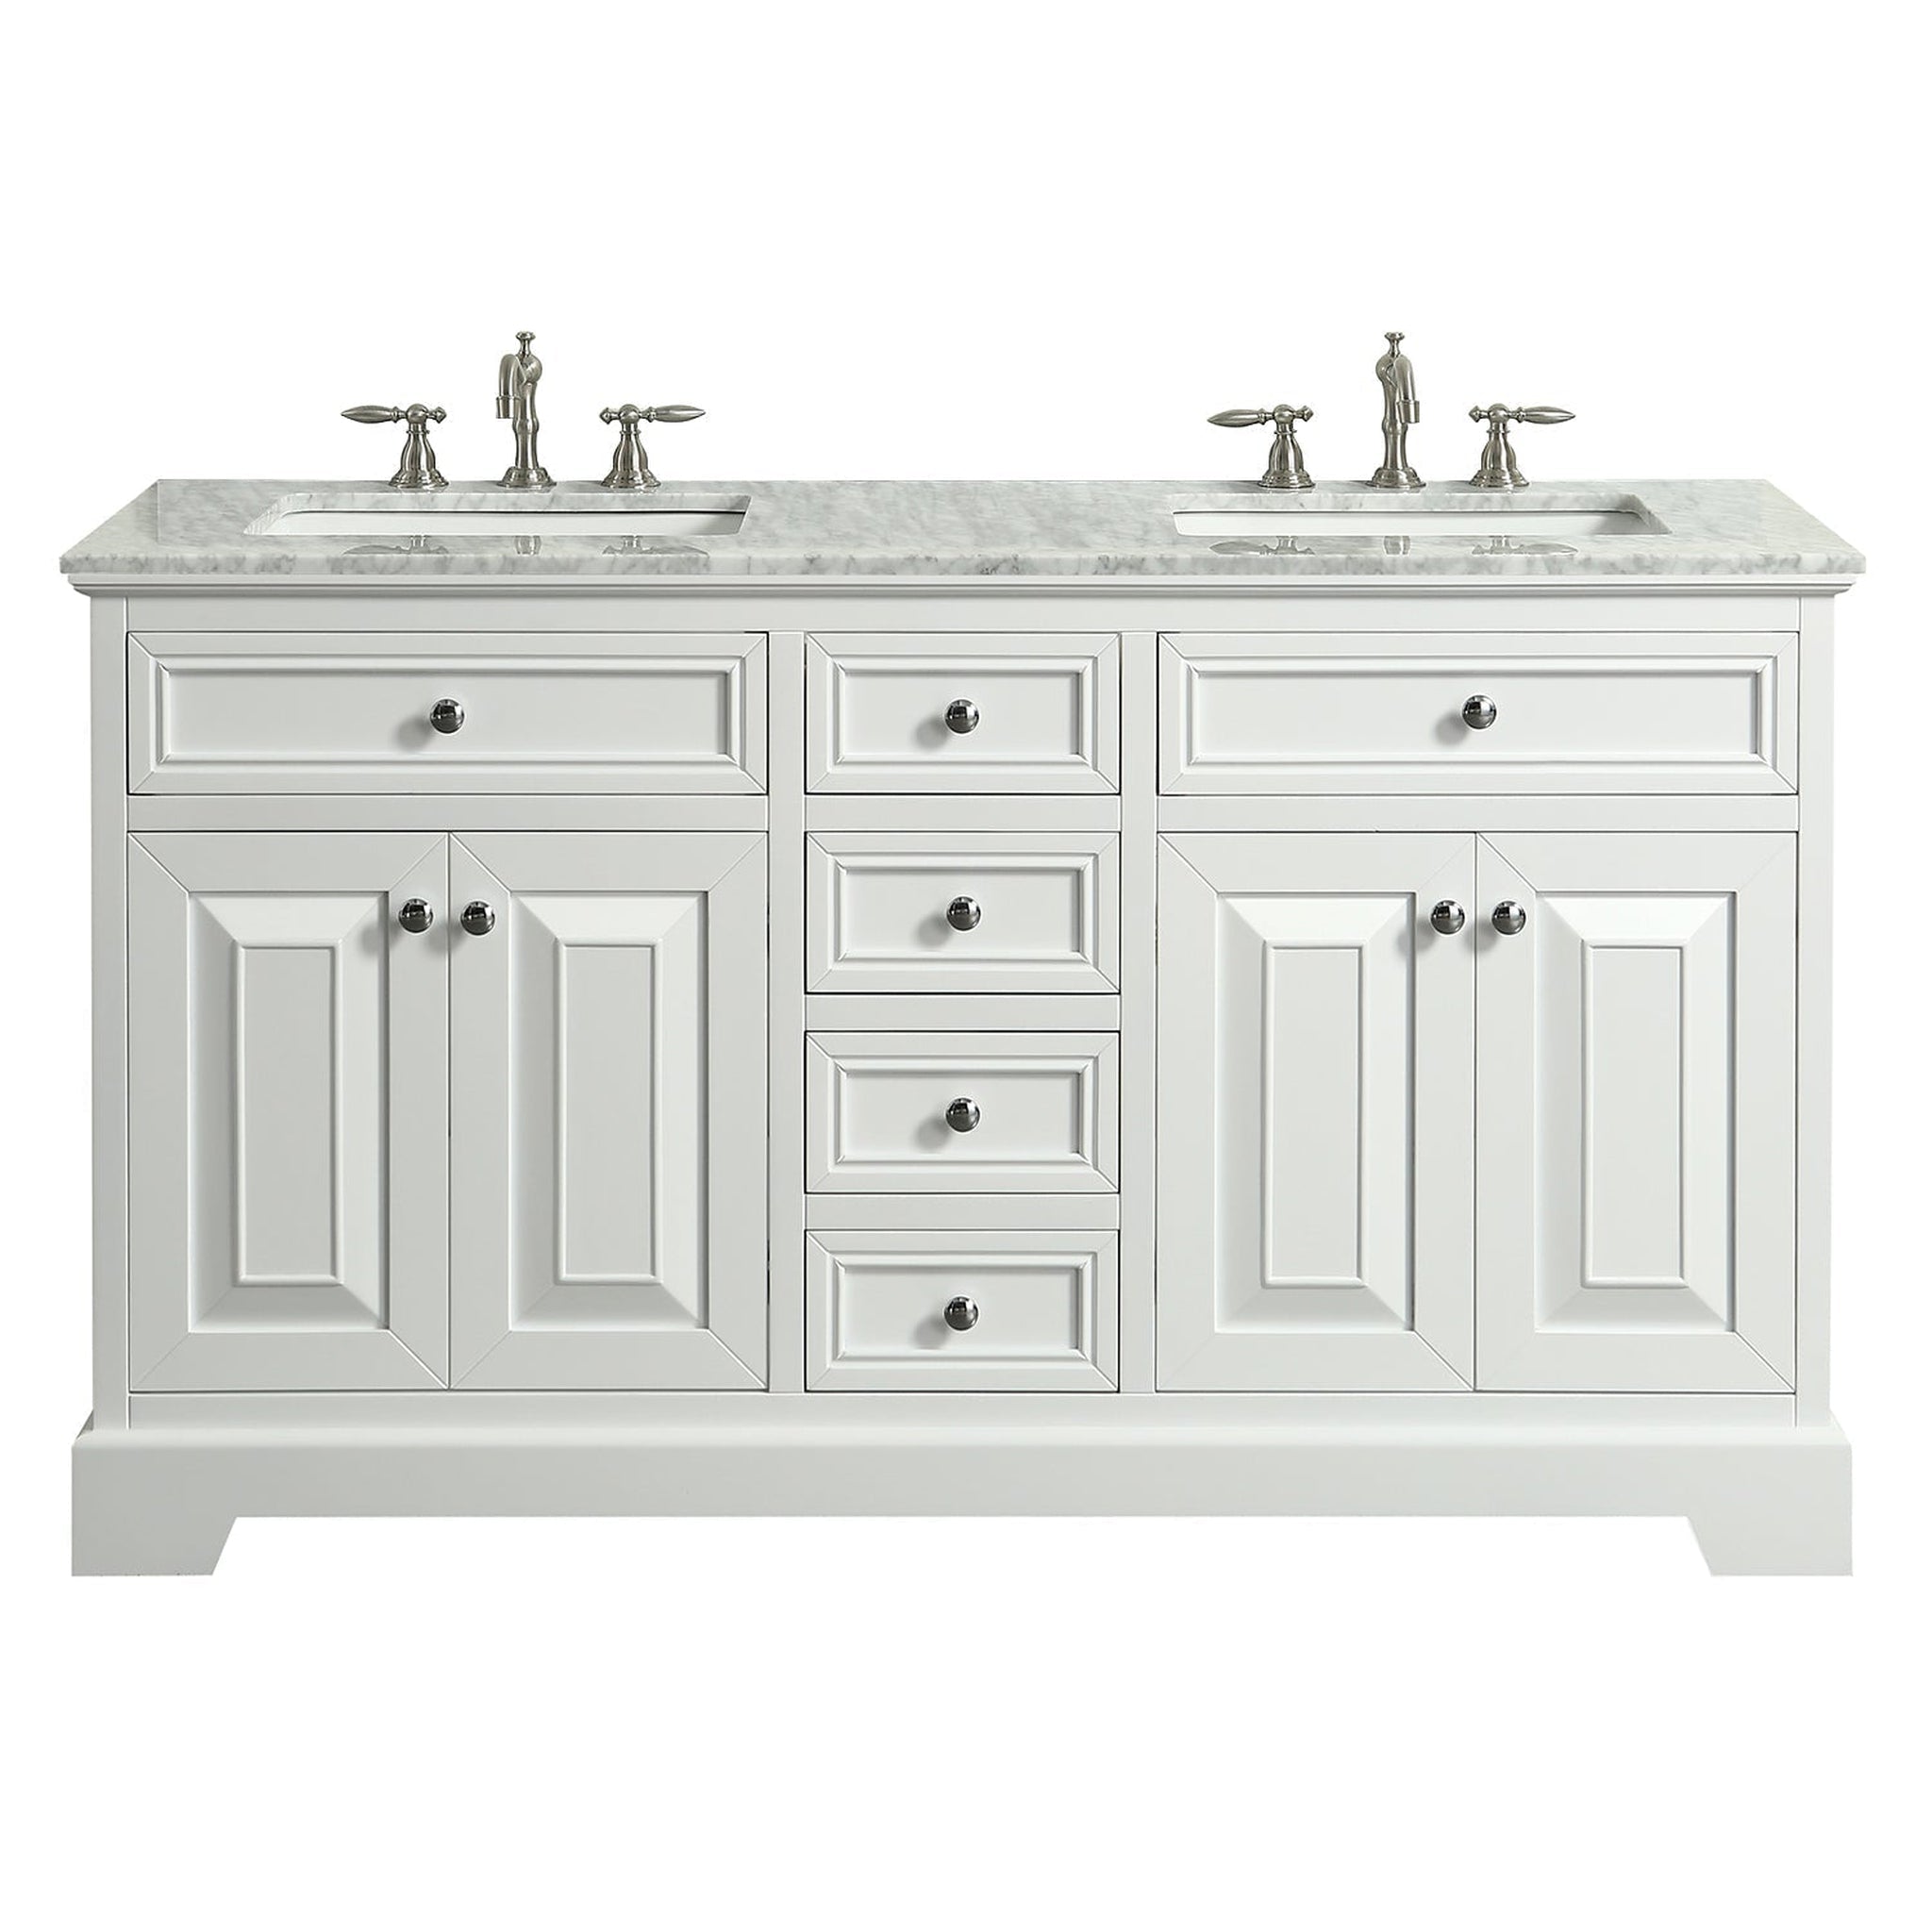 Eviva, Eviva Monroe 72" x 34" White Bathroom Vanity With White Carrara Marble Countertop and Double Undermount Sink